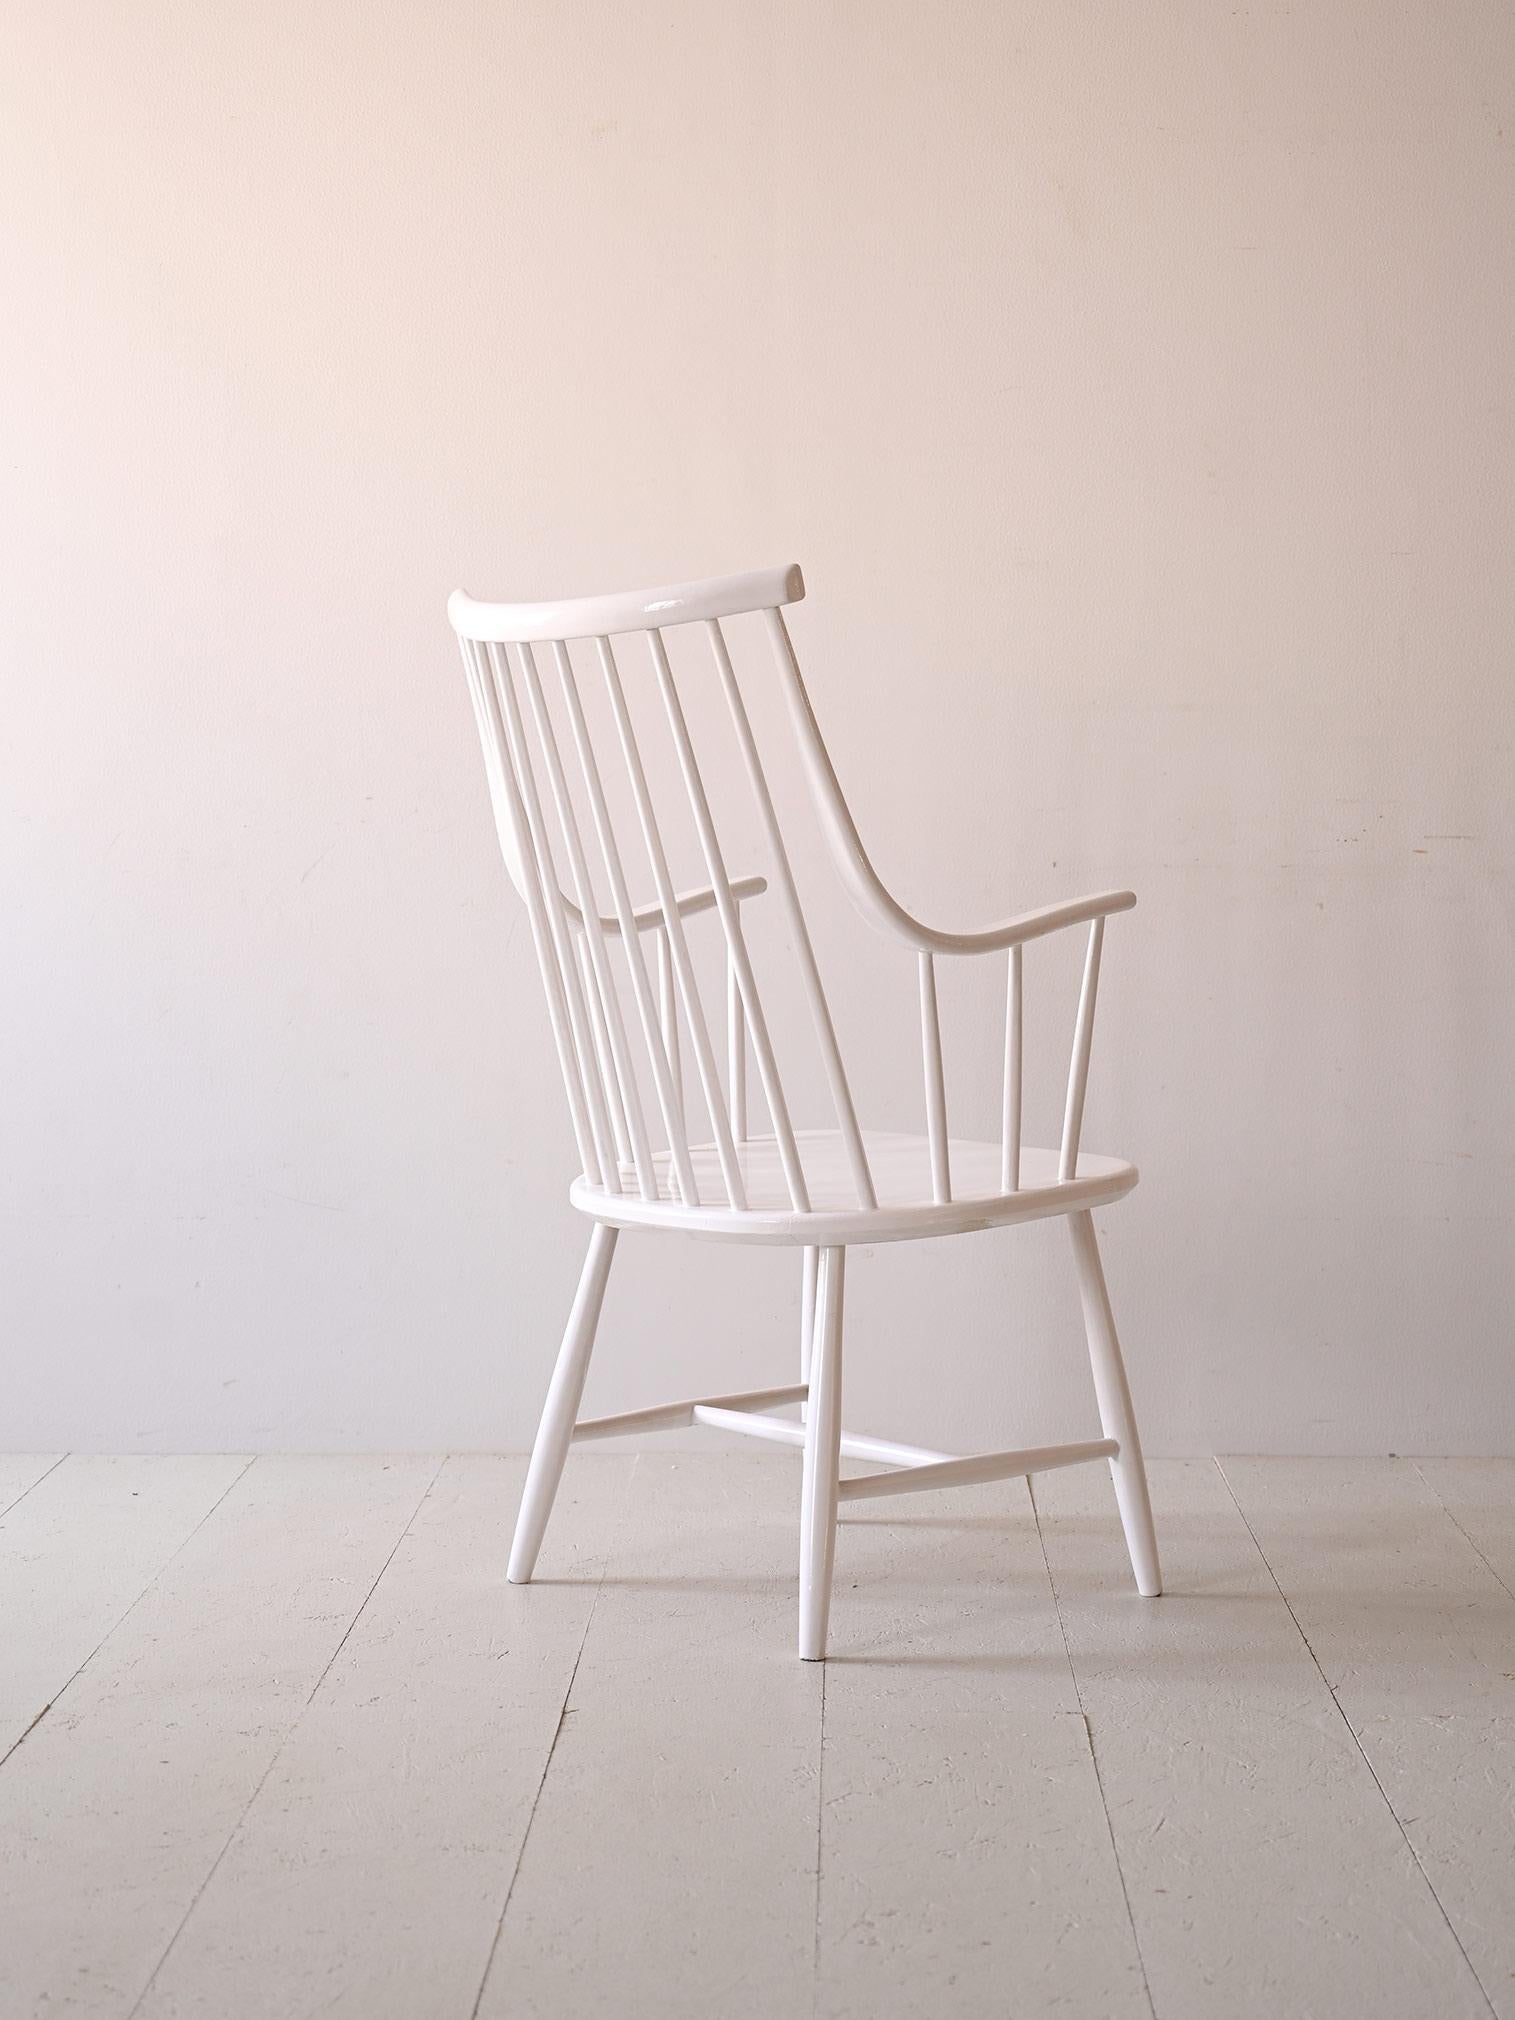 Swedish Chair designed by LENA LARSSON model 